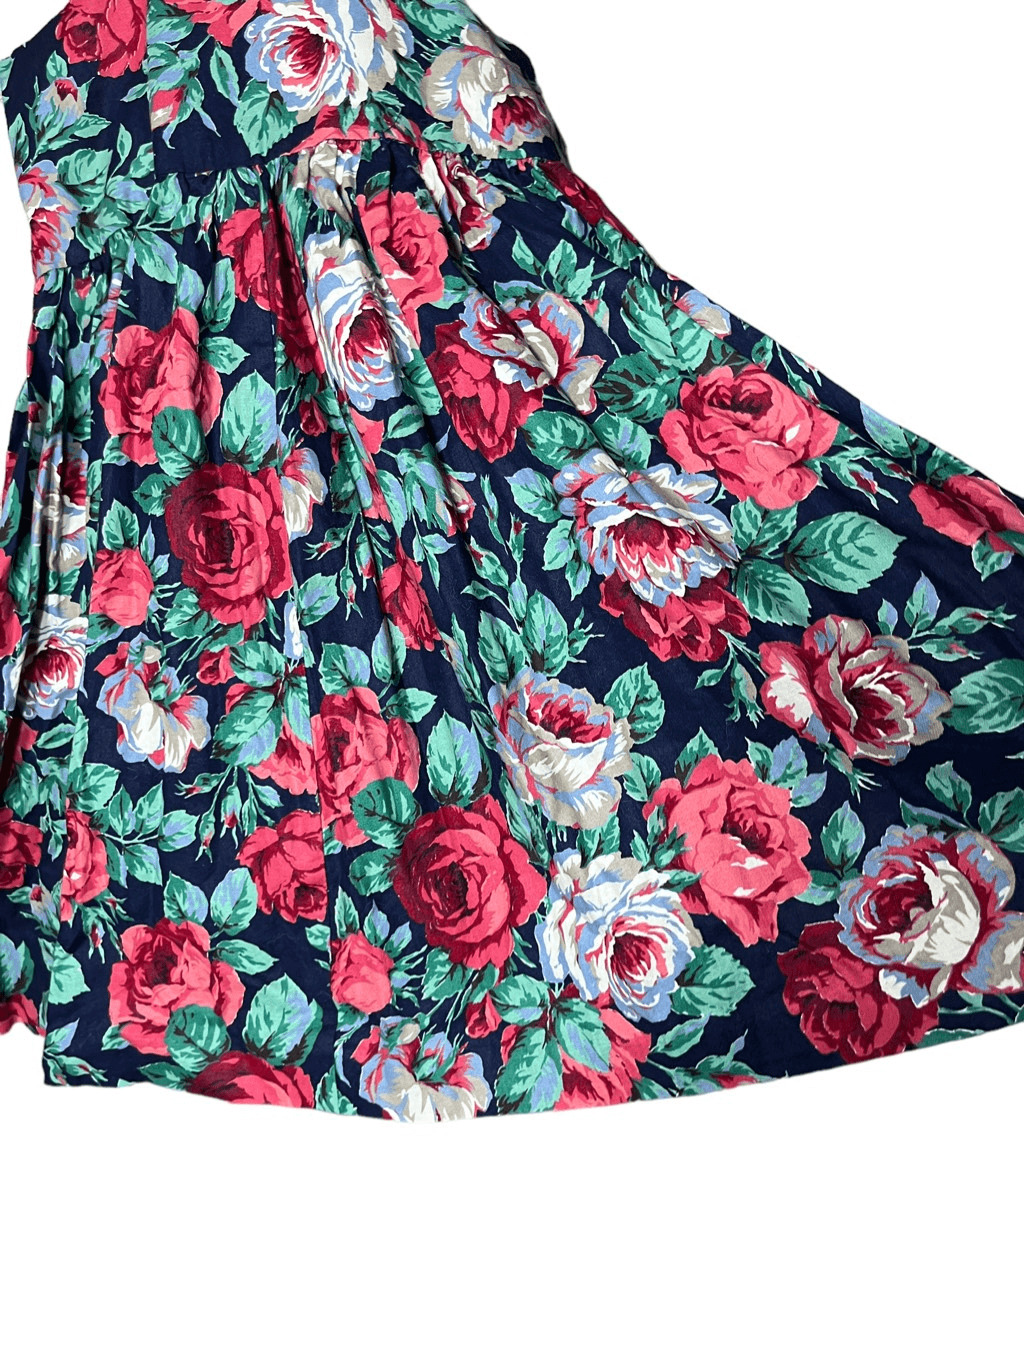 Vintage Handmade Flower Print Jumper Dress - image 4